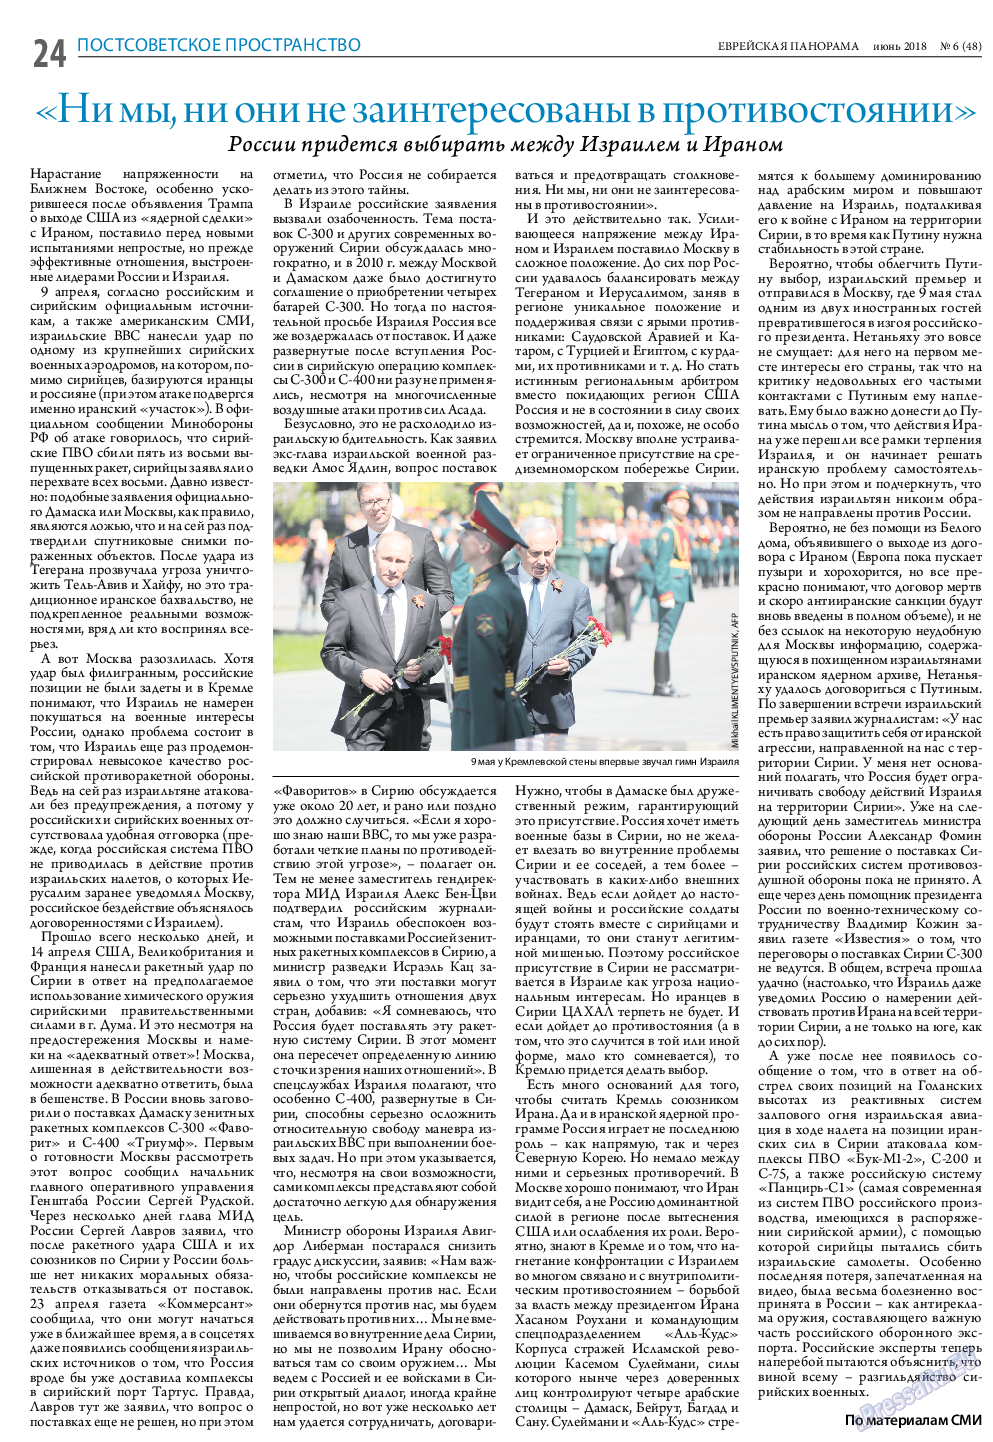 Еврейская панорама, газета. 2018 №6 стр.24